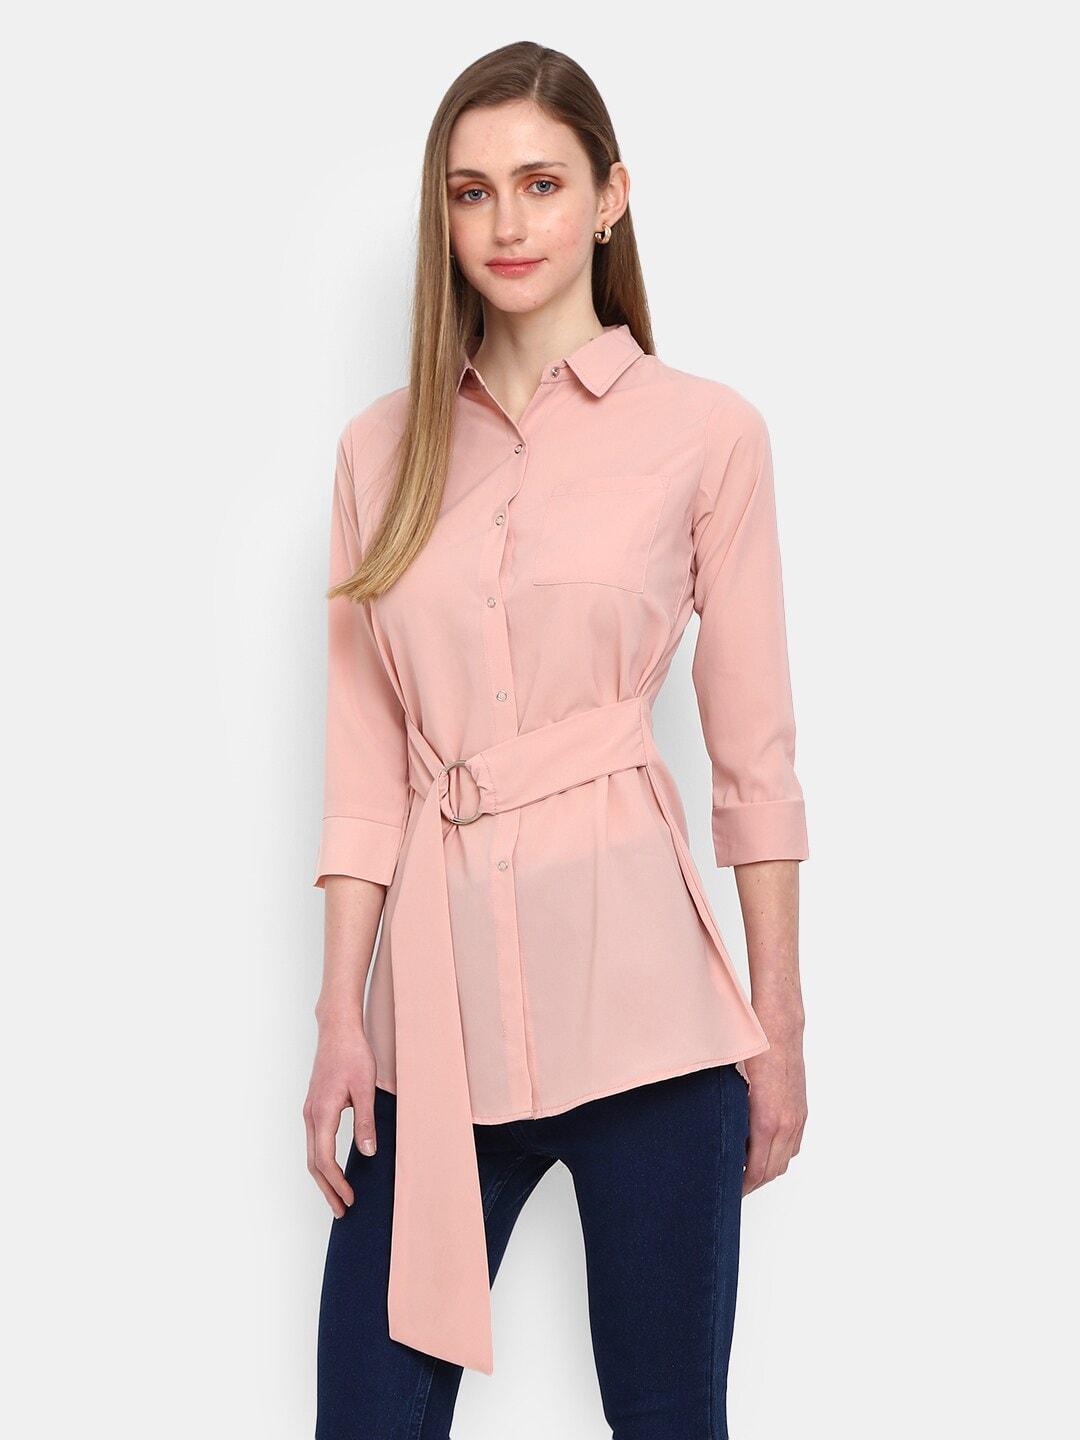 v-mart women peach-coloured polyester spread collar casual shirt